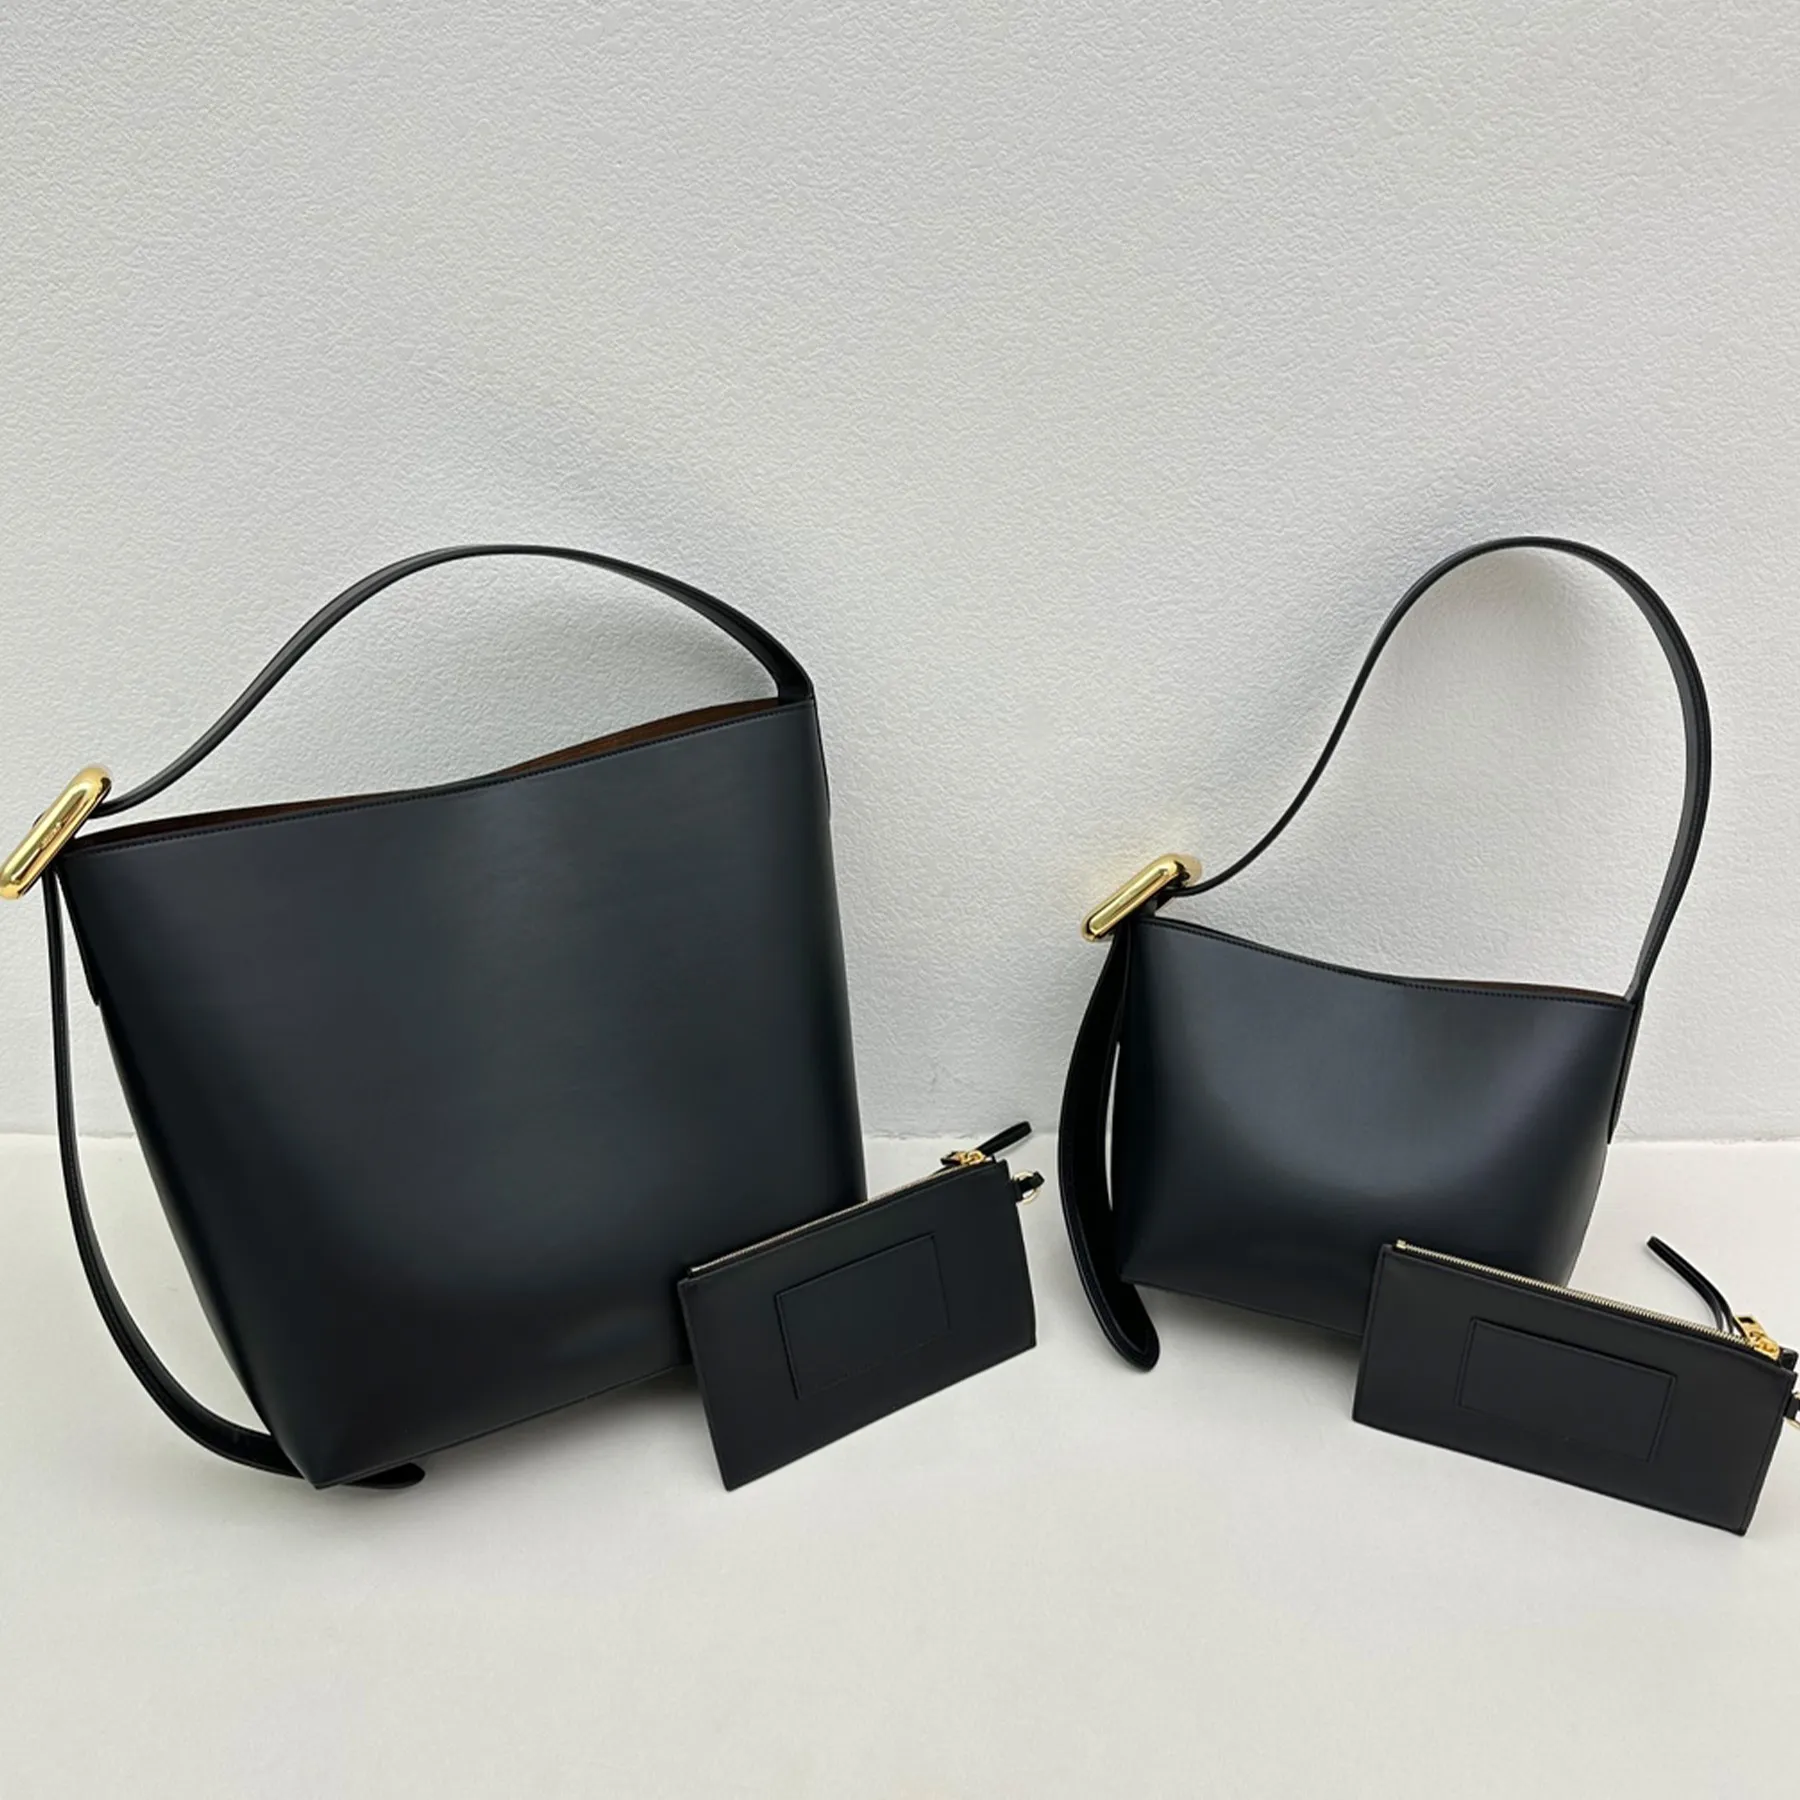 new style bucket bag designer bag fashion women genuine leather golden hardware shoulder bag 2 size minimalism luxury handbag outing casual vacation tote bag